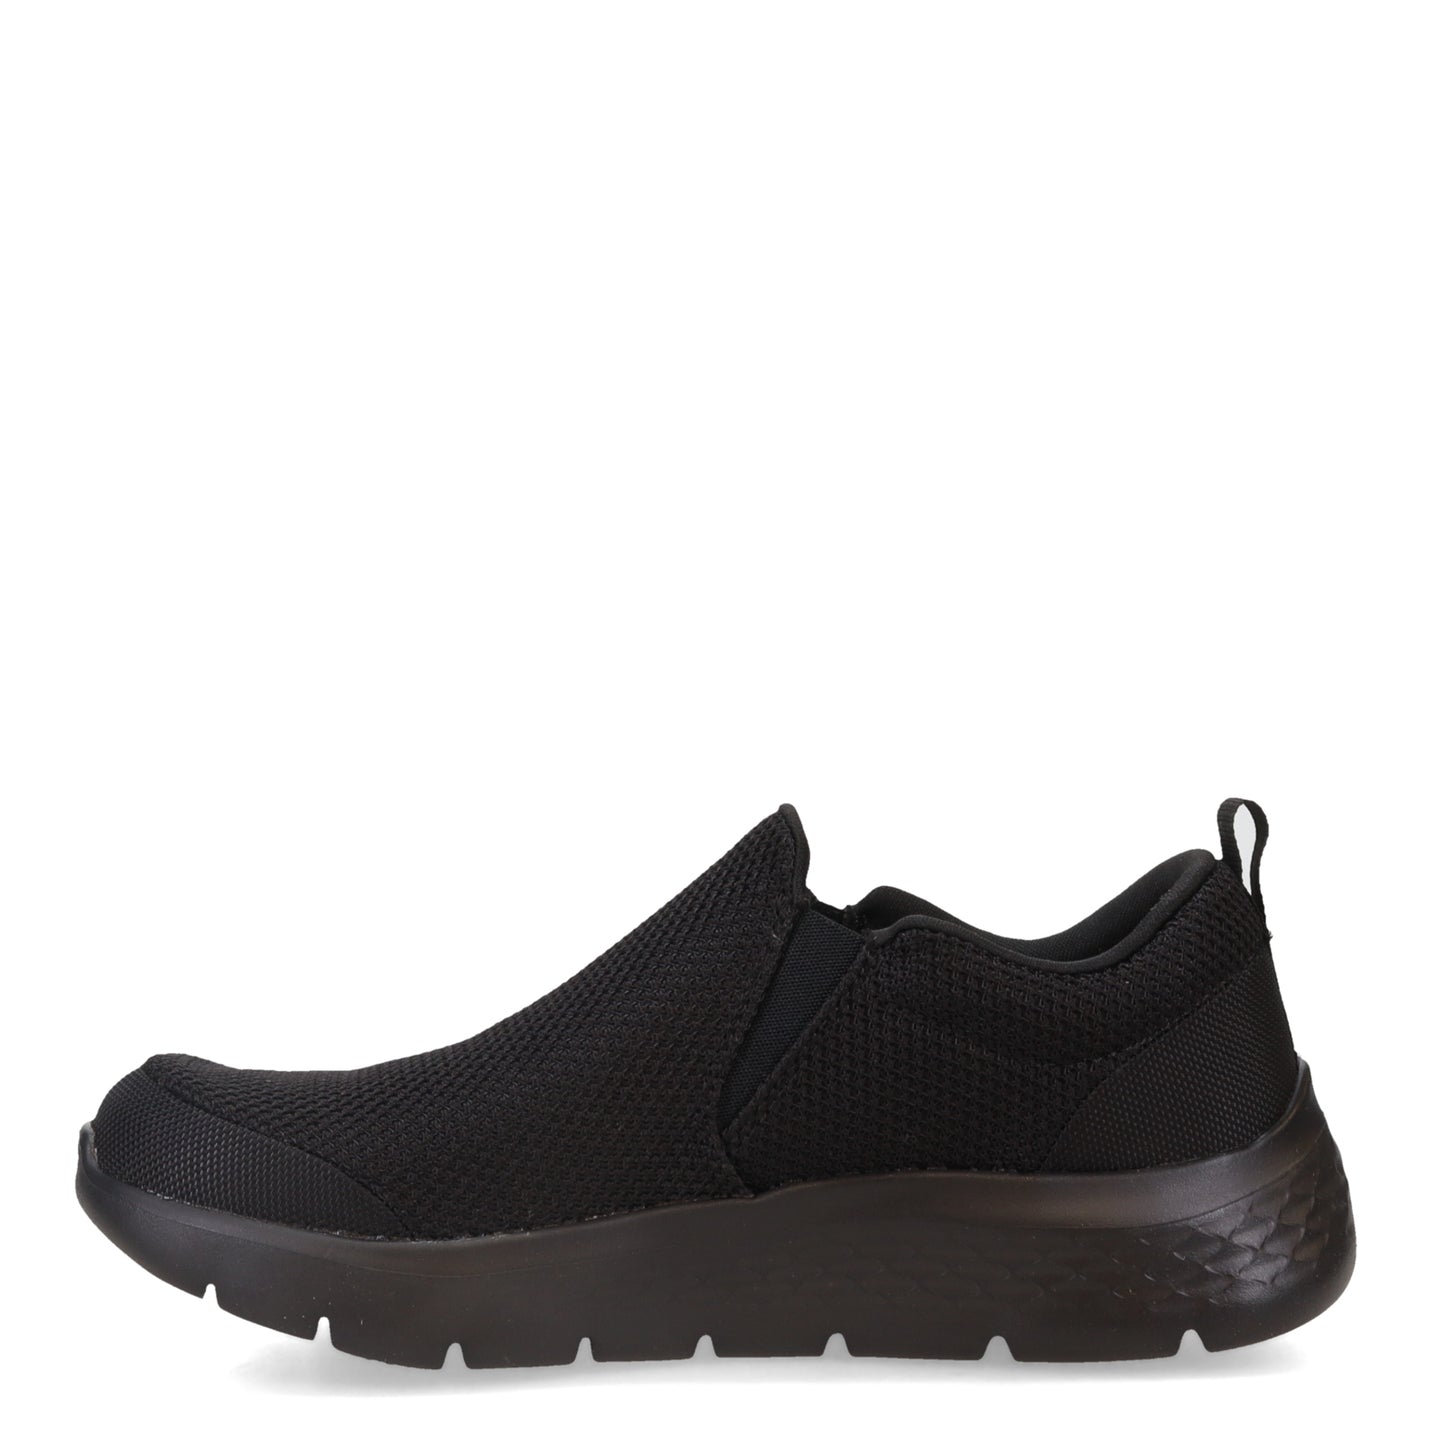 Peltz Shoes  Men's Skechers GO WALK Flex - Impeccable II Walking Shoe Black 216492-BBK